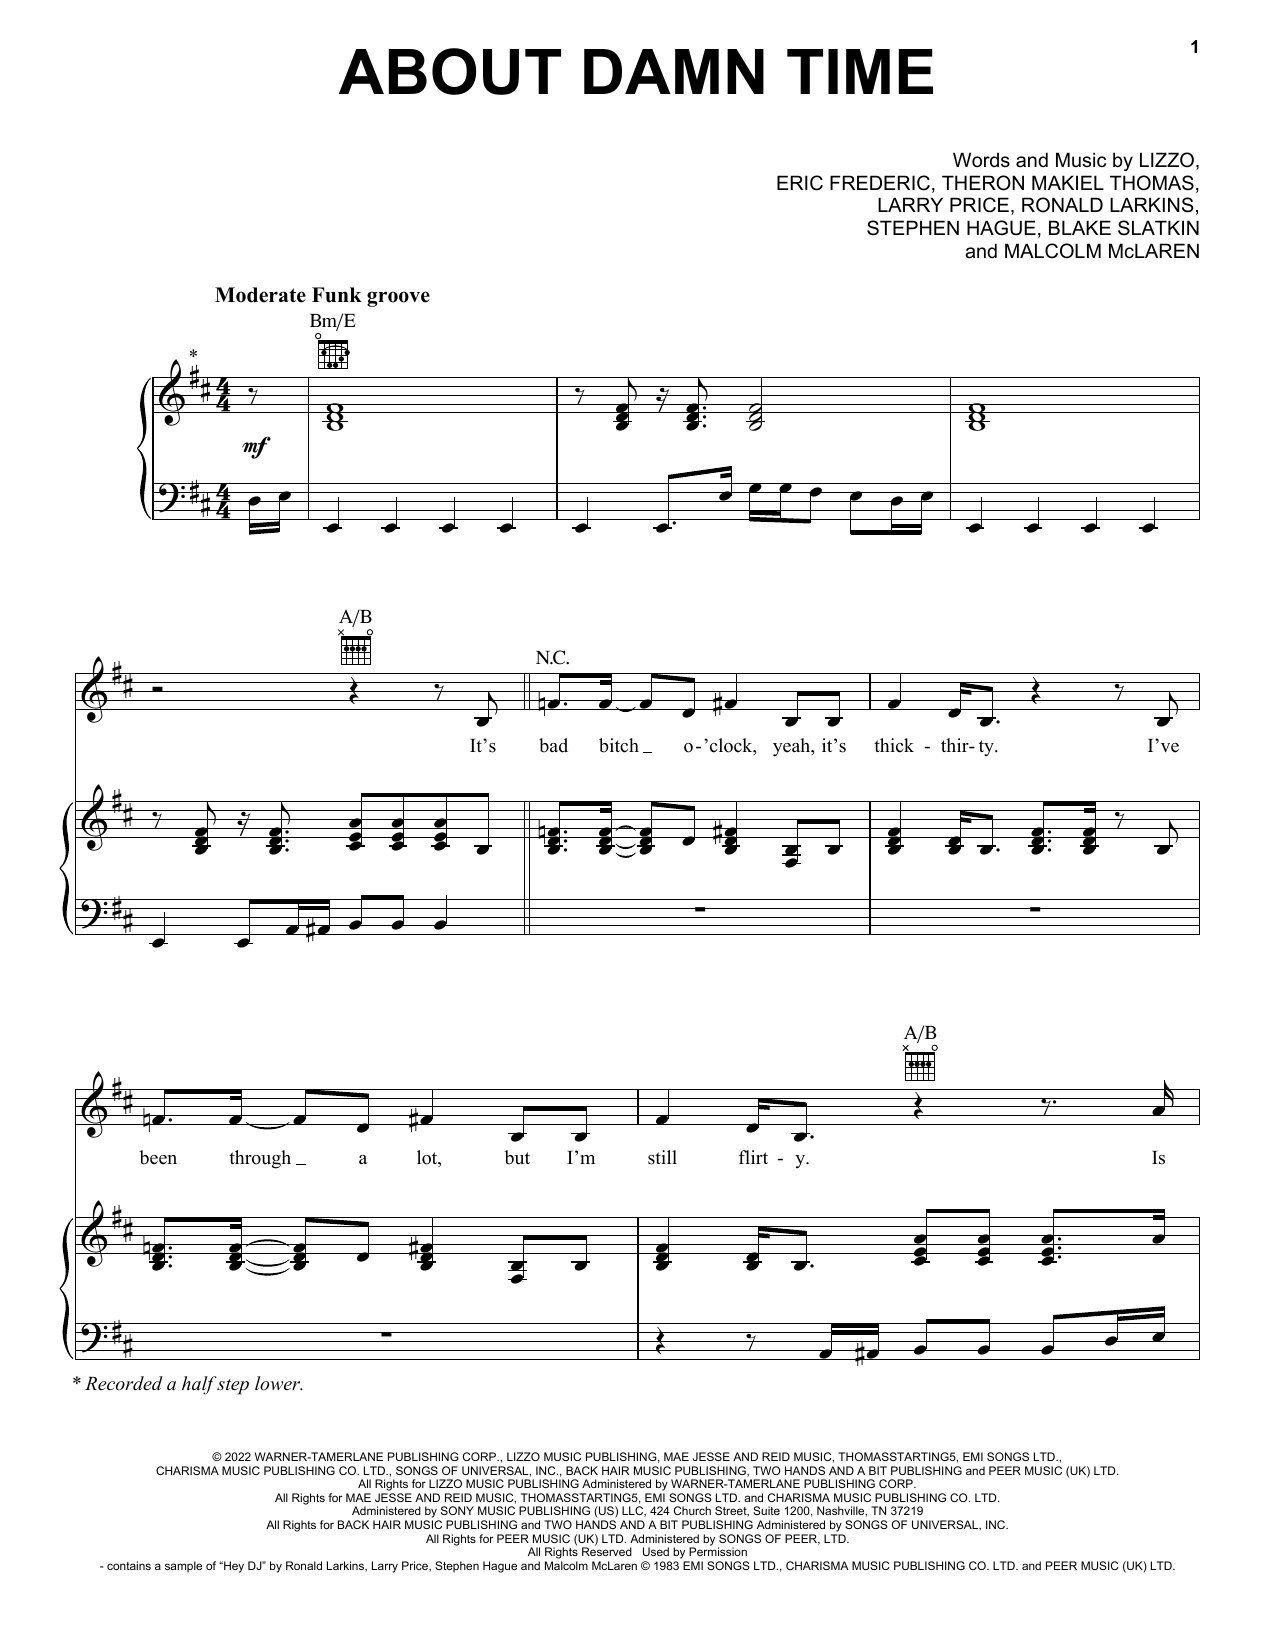 Lizzo About Damn Time sheet music notes printable PDF score